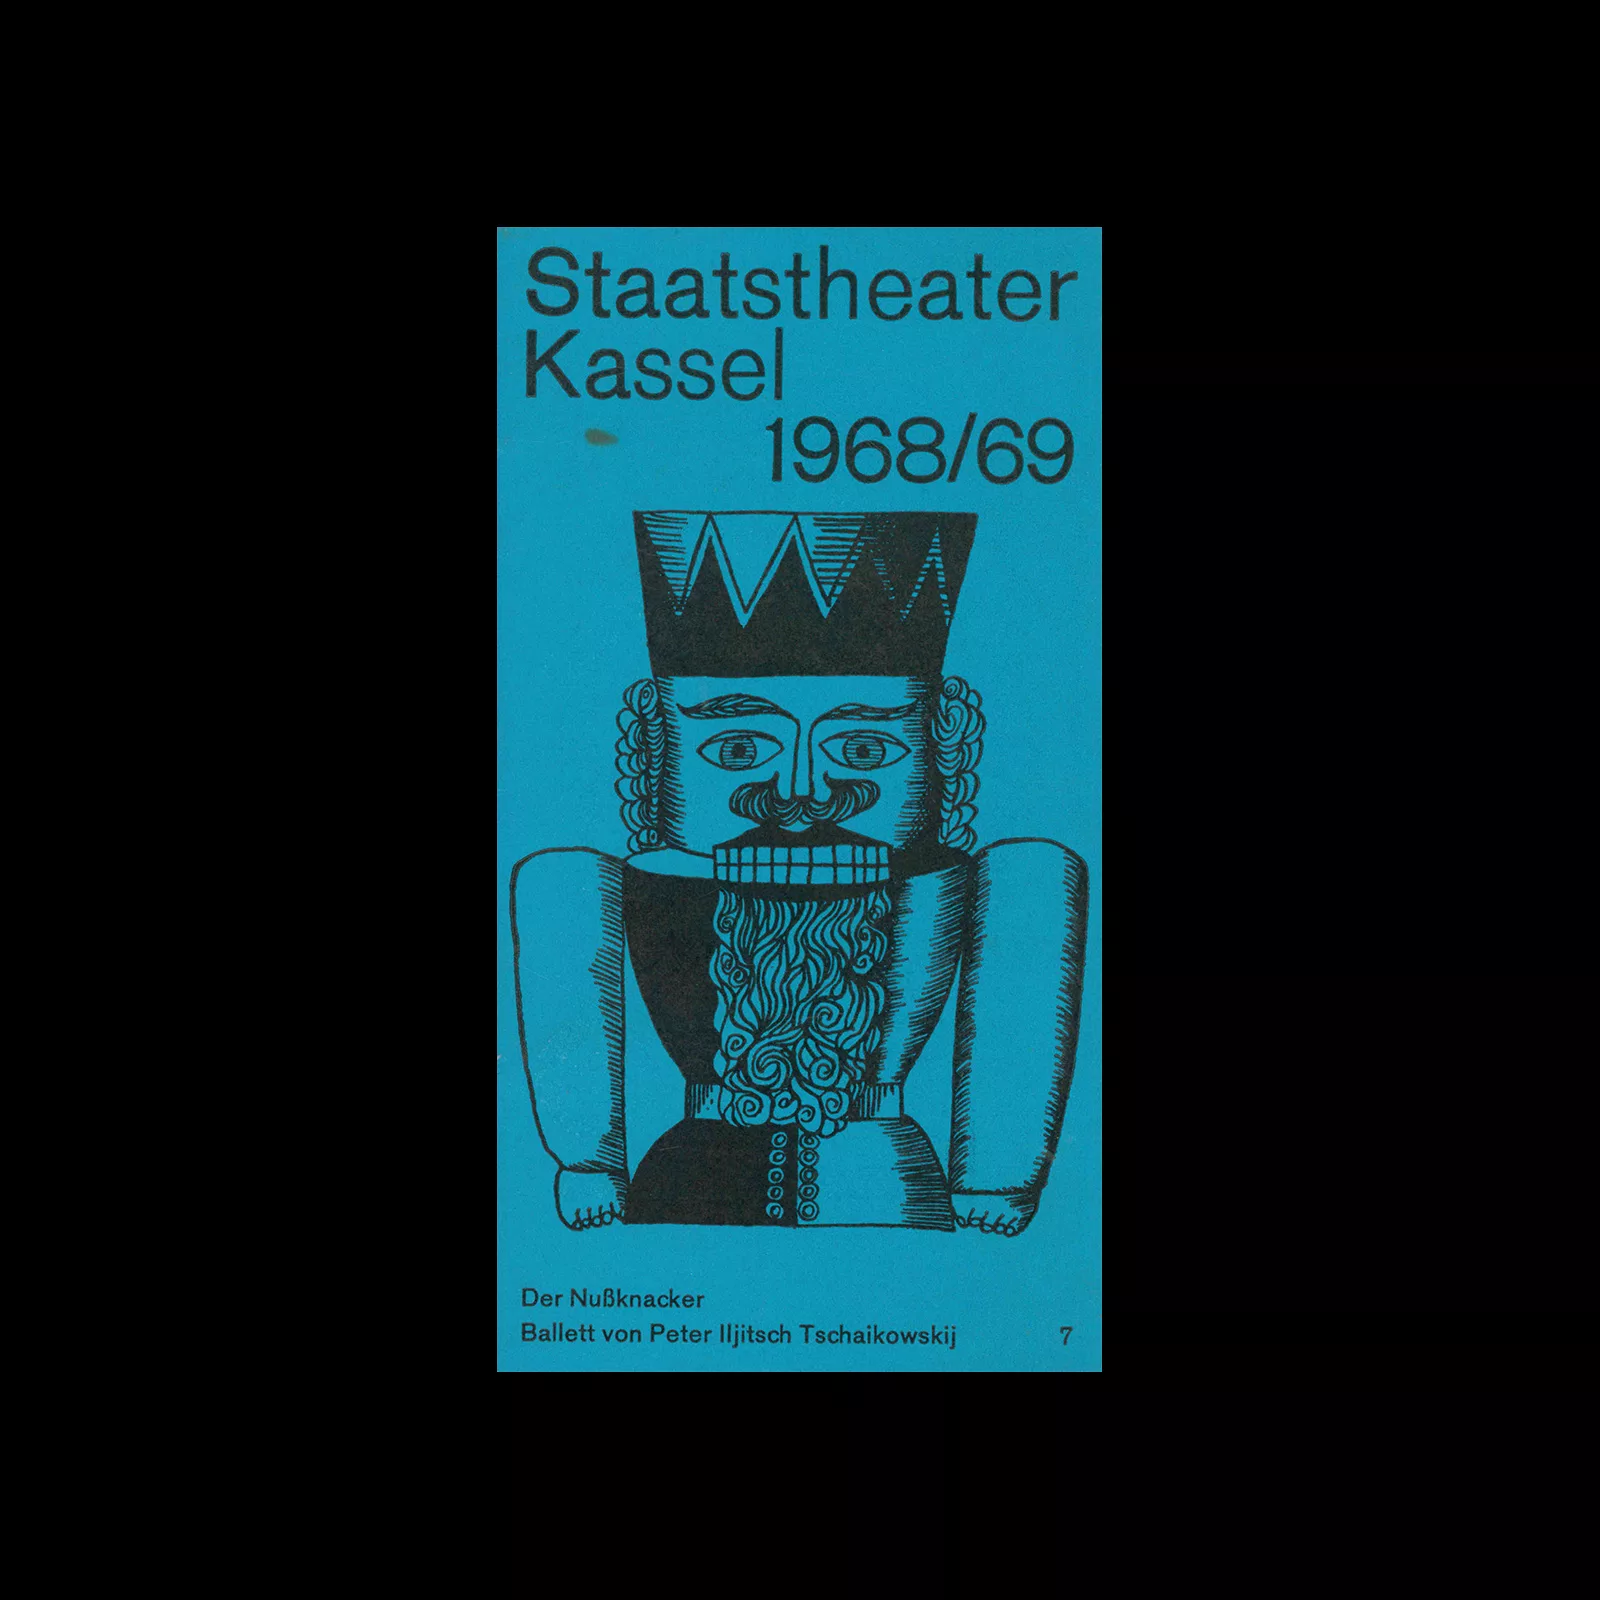 Staatstheater Kassel 1968/69. Programm Nr. 7, Der Nußknacker, 1968. Designed by Karl Oskar Blase